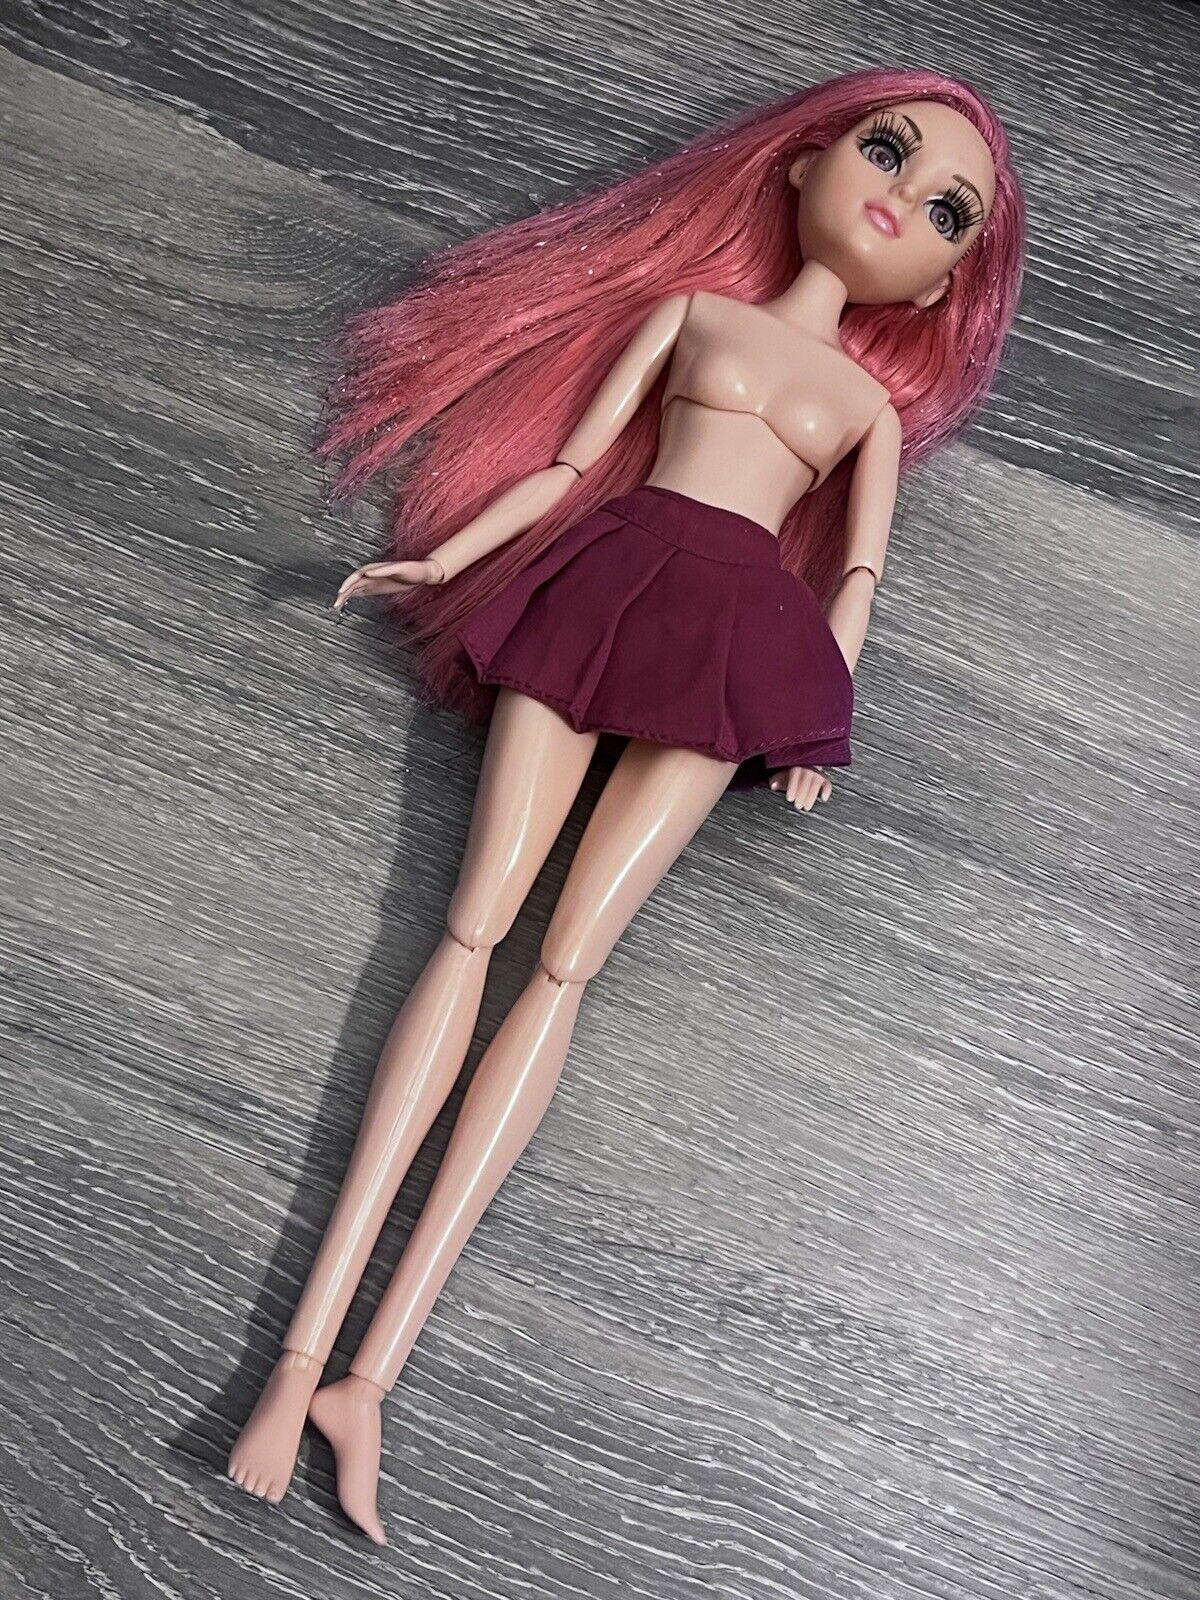 moxie girlz doll Prototype 2011